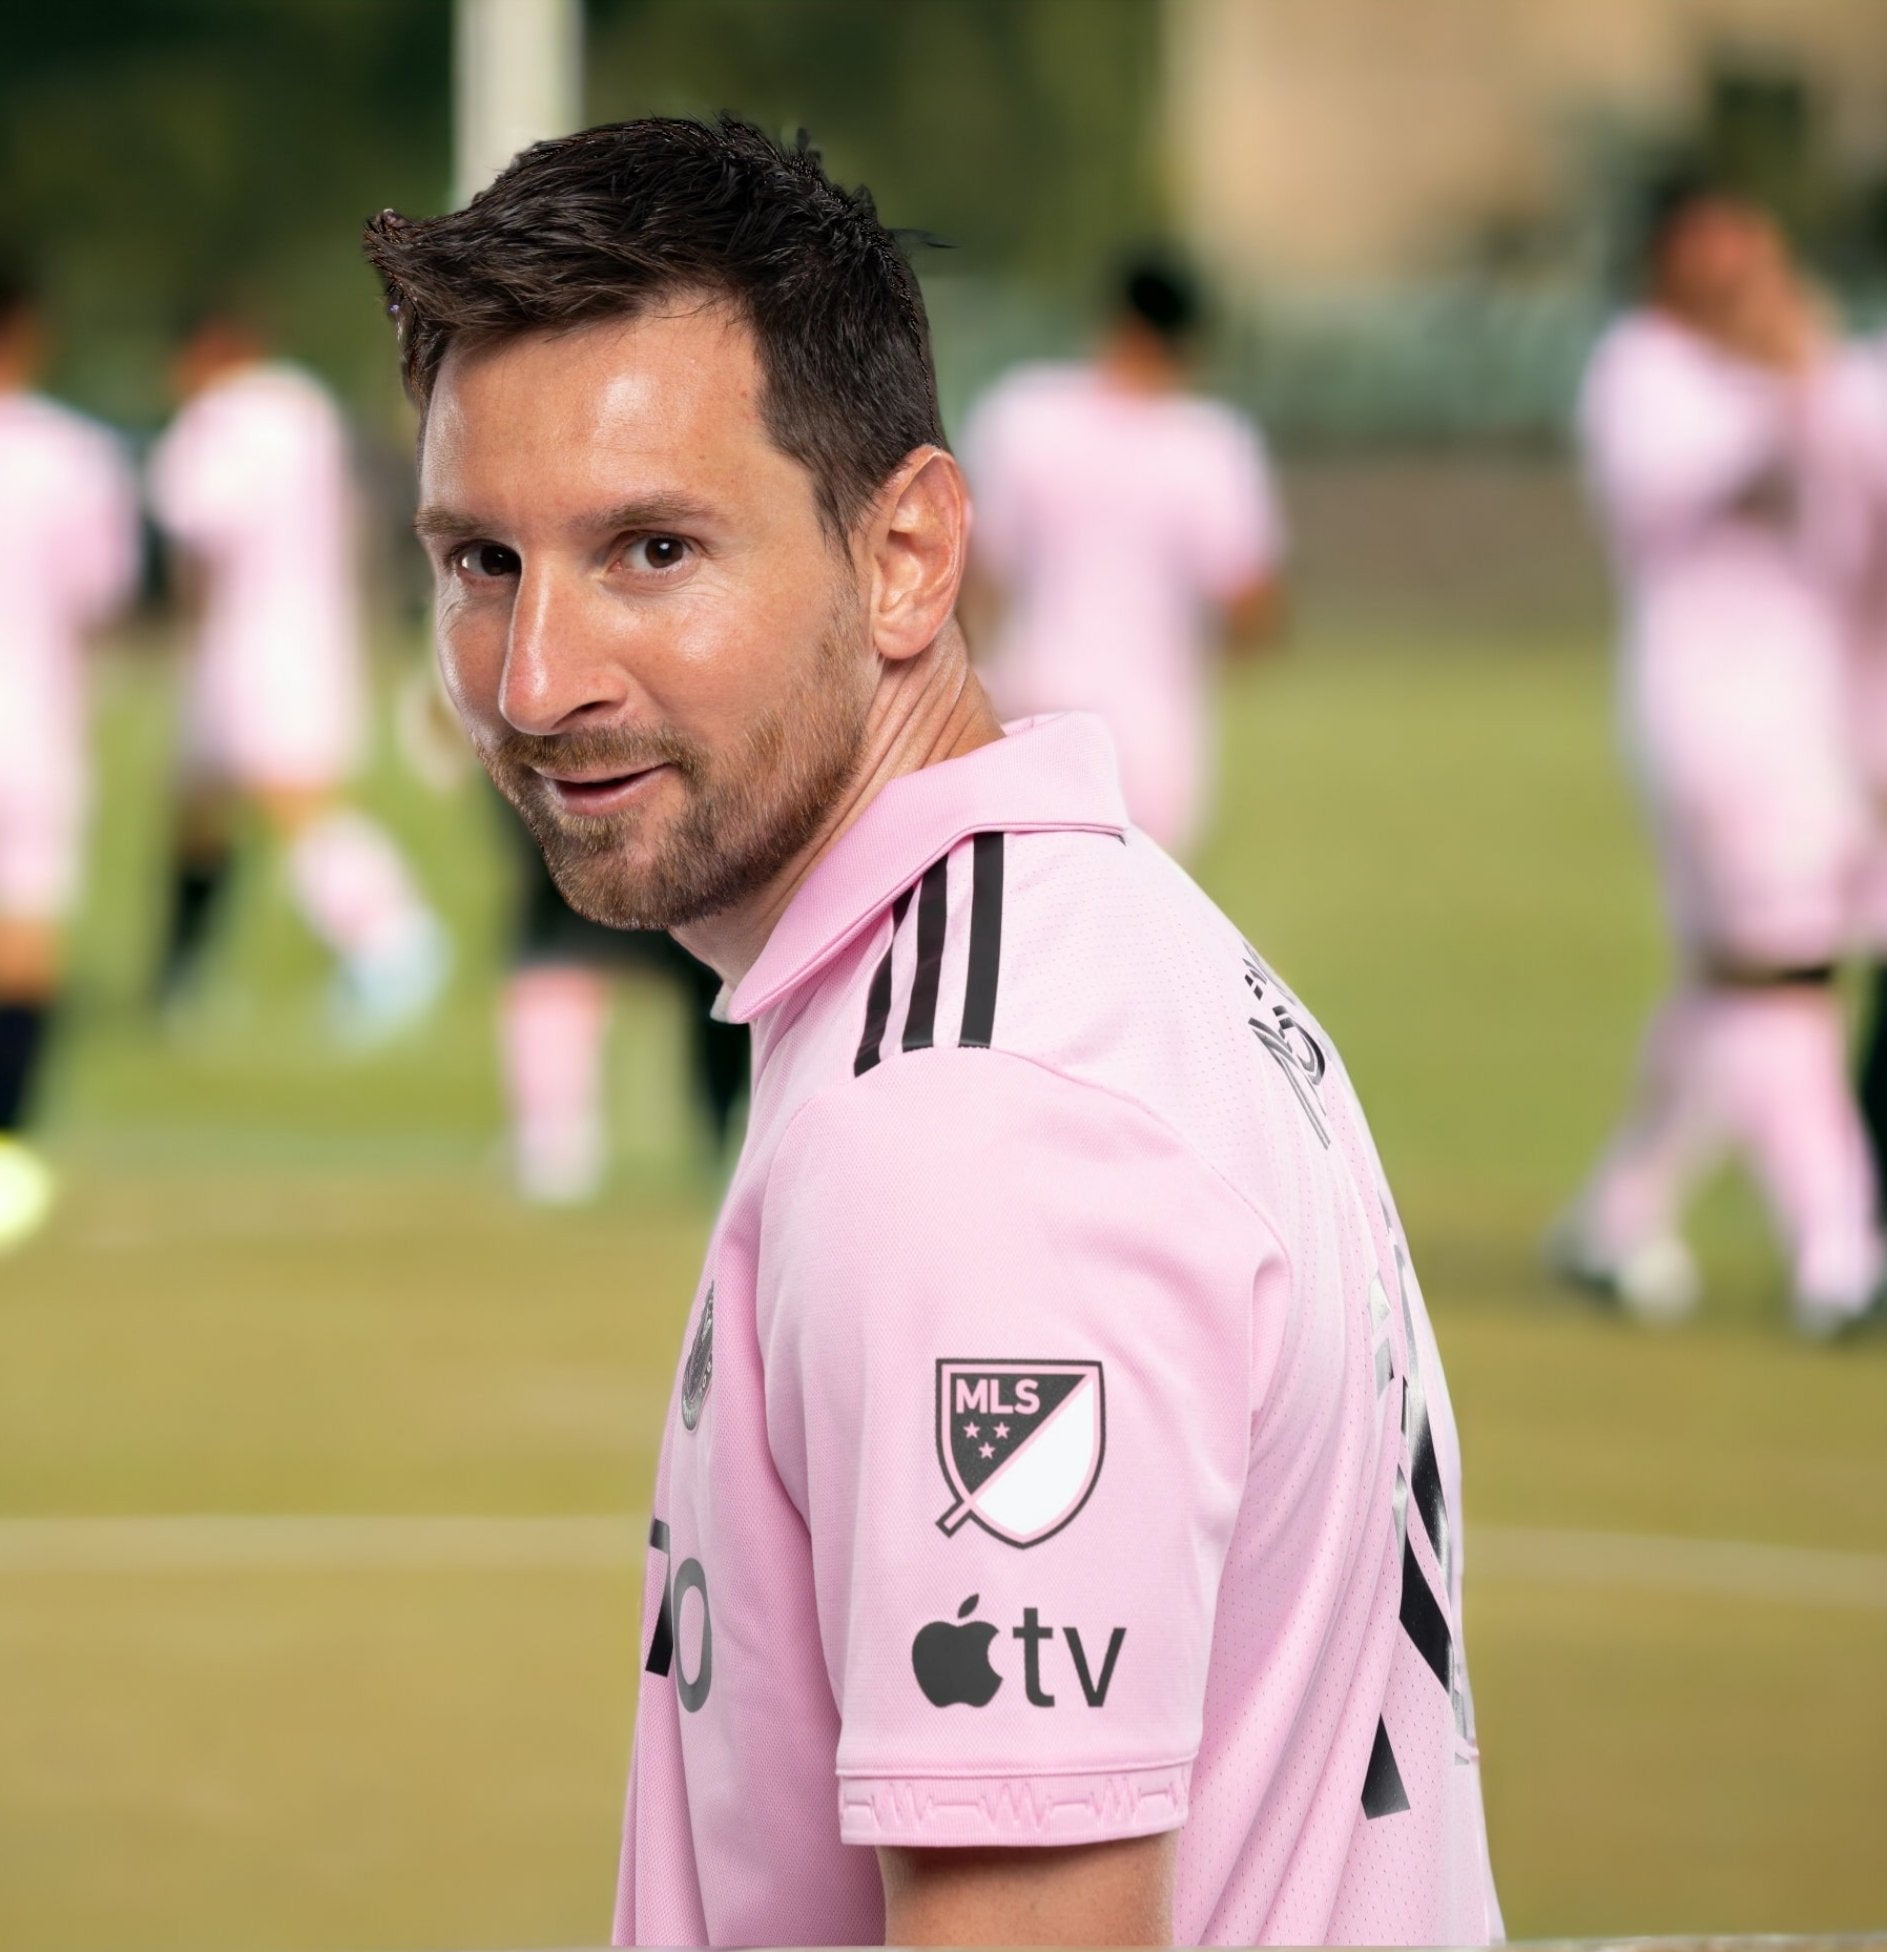 Messi 10 Inter Miami FC Pink Design Baseball Jersey - Growkoc